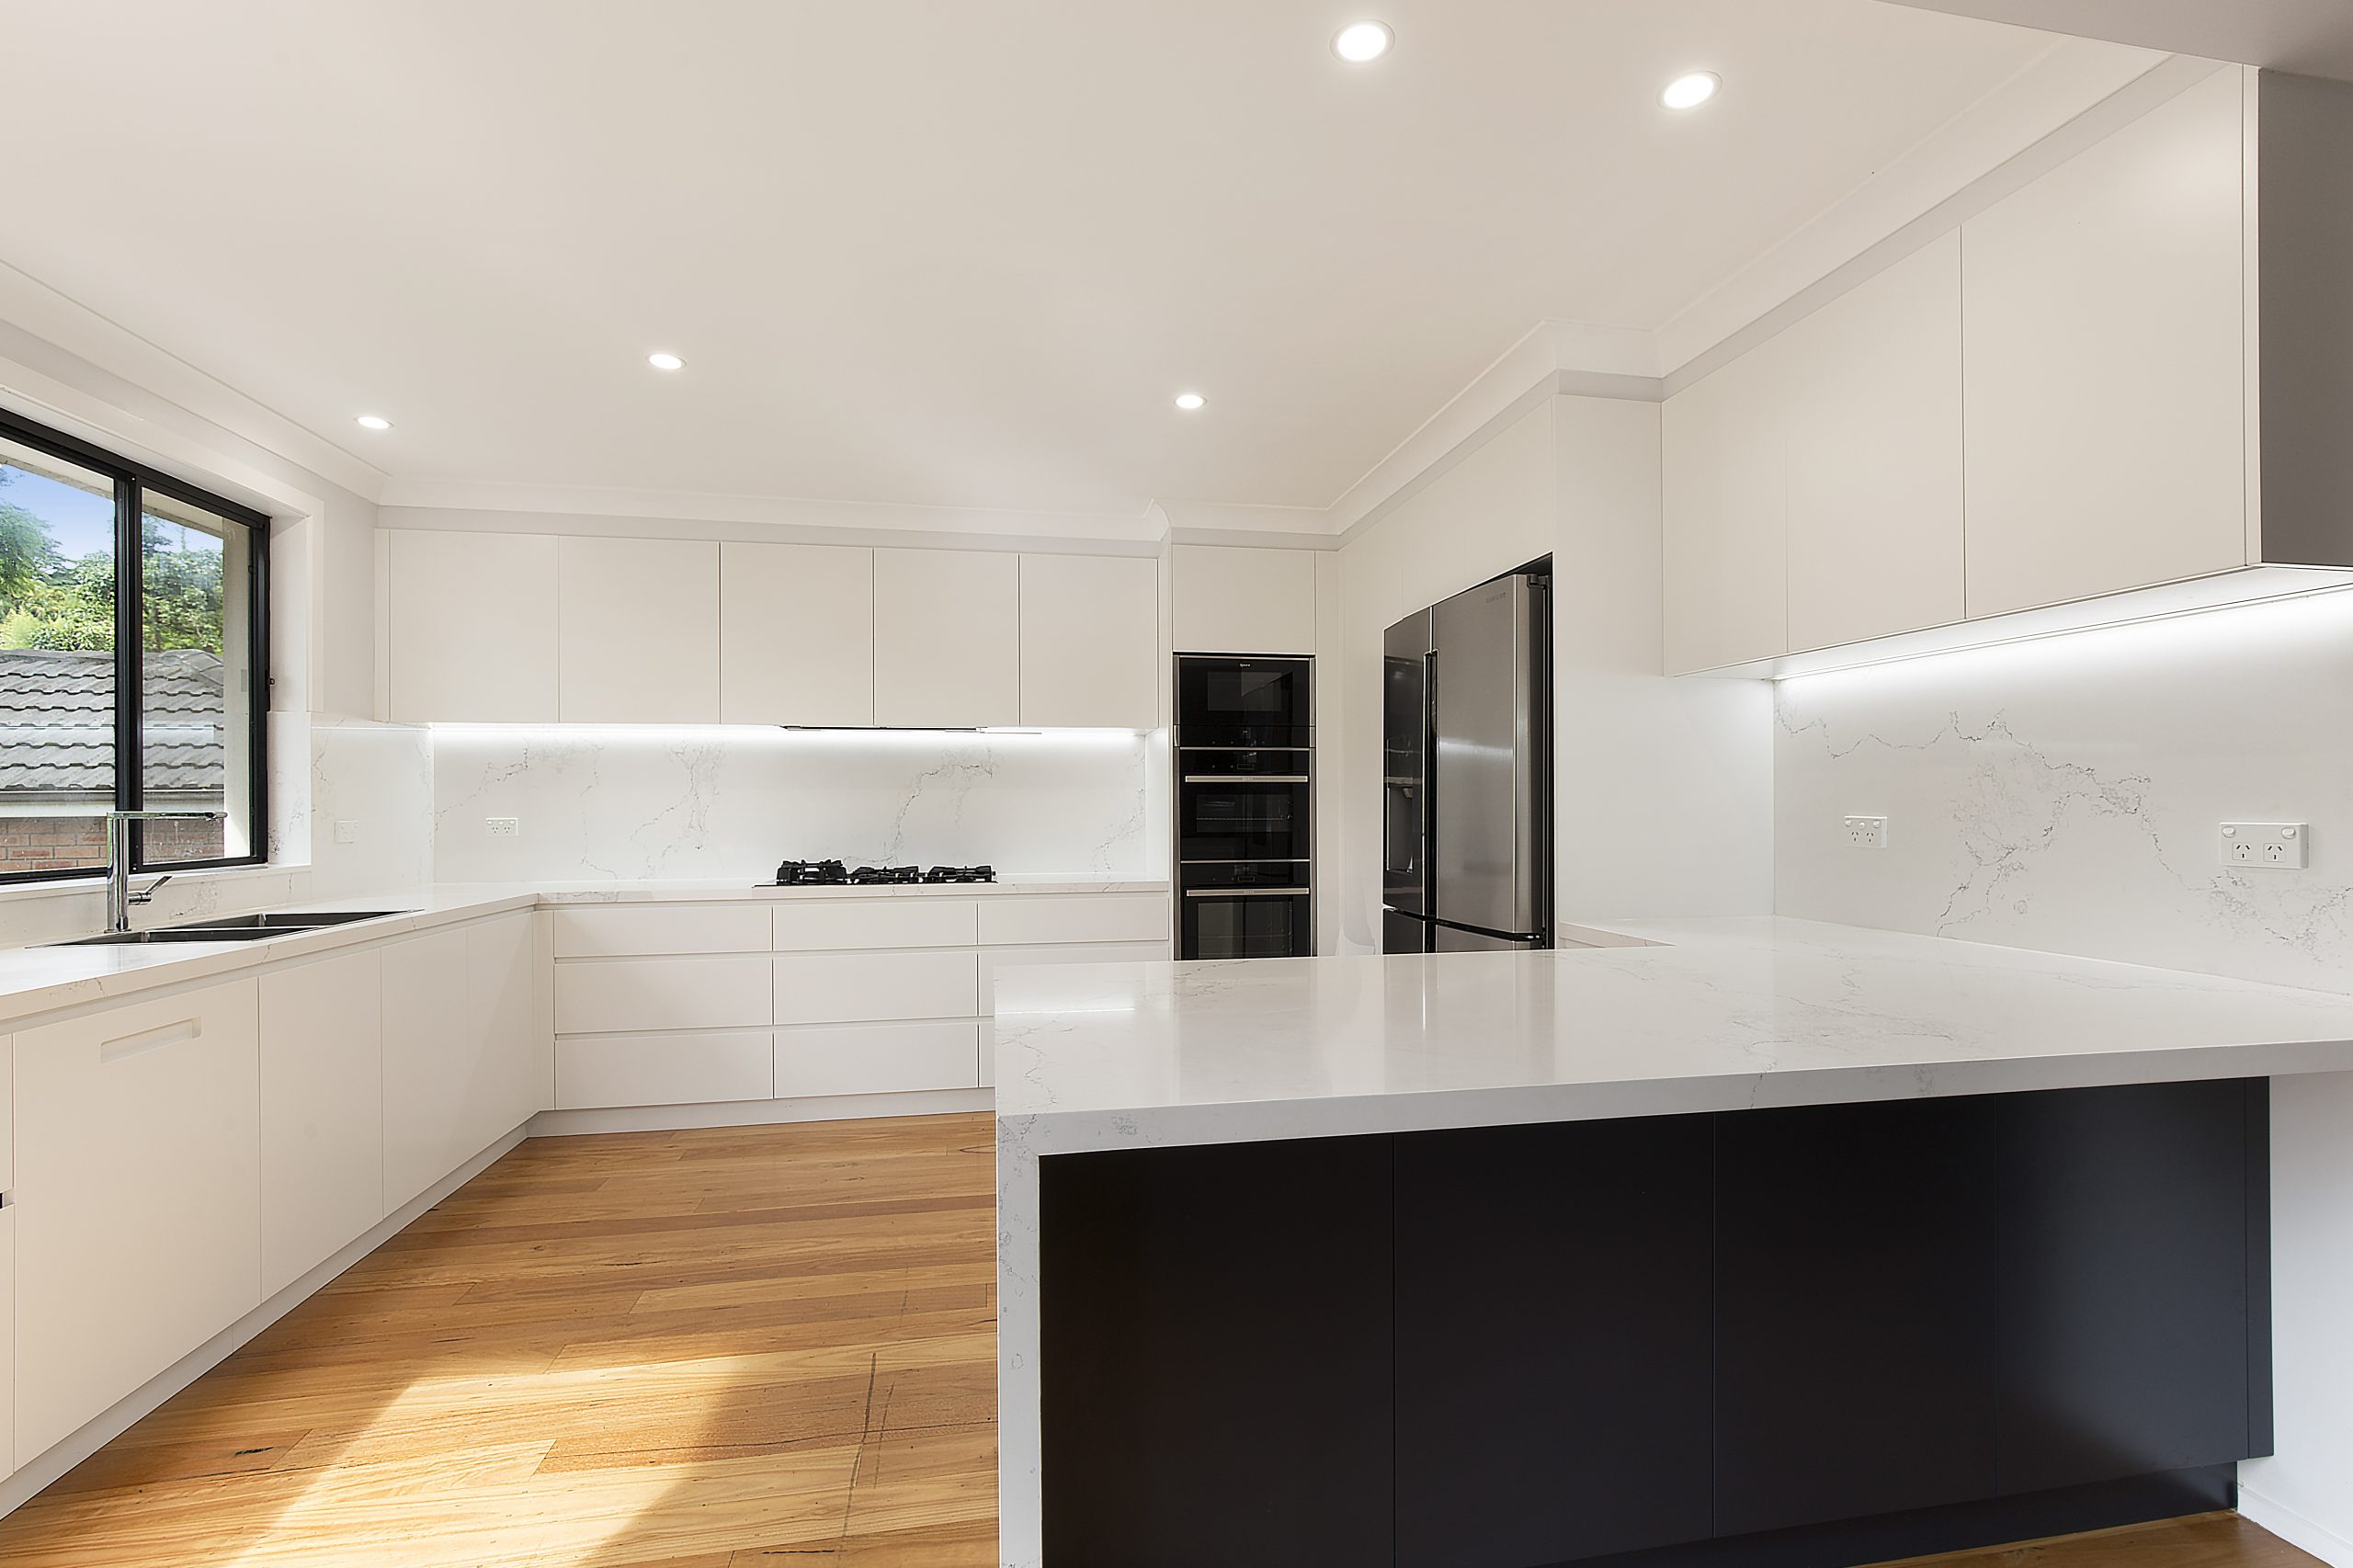 AFTER Forestville Renovation, Streamline polyurethane kitchen with integrated 45 degree handles